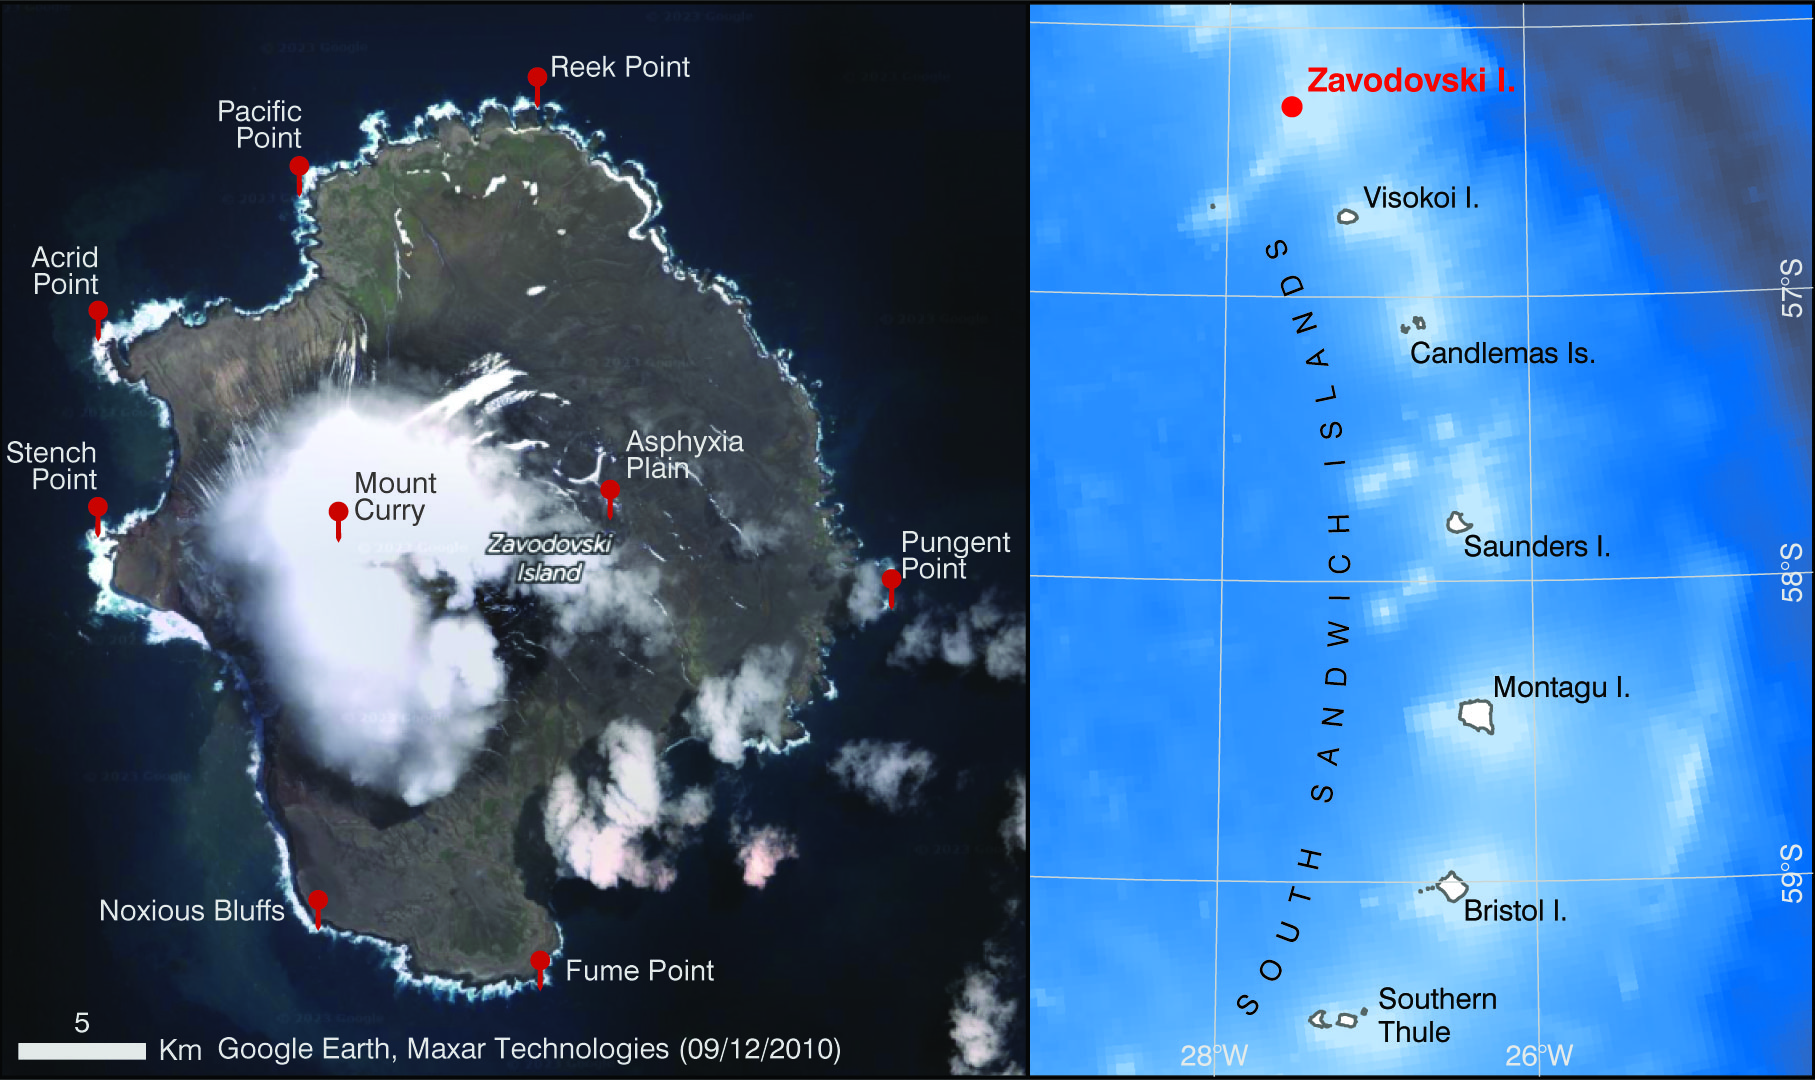 Map showing names across Zavadovski Island